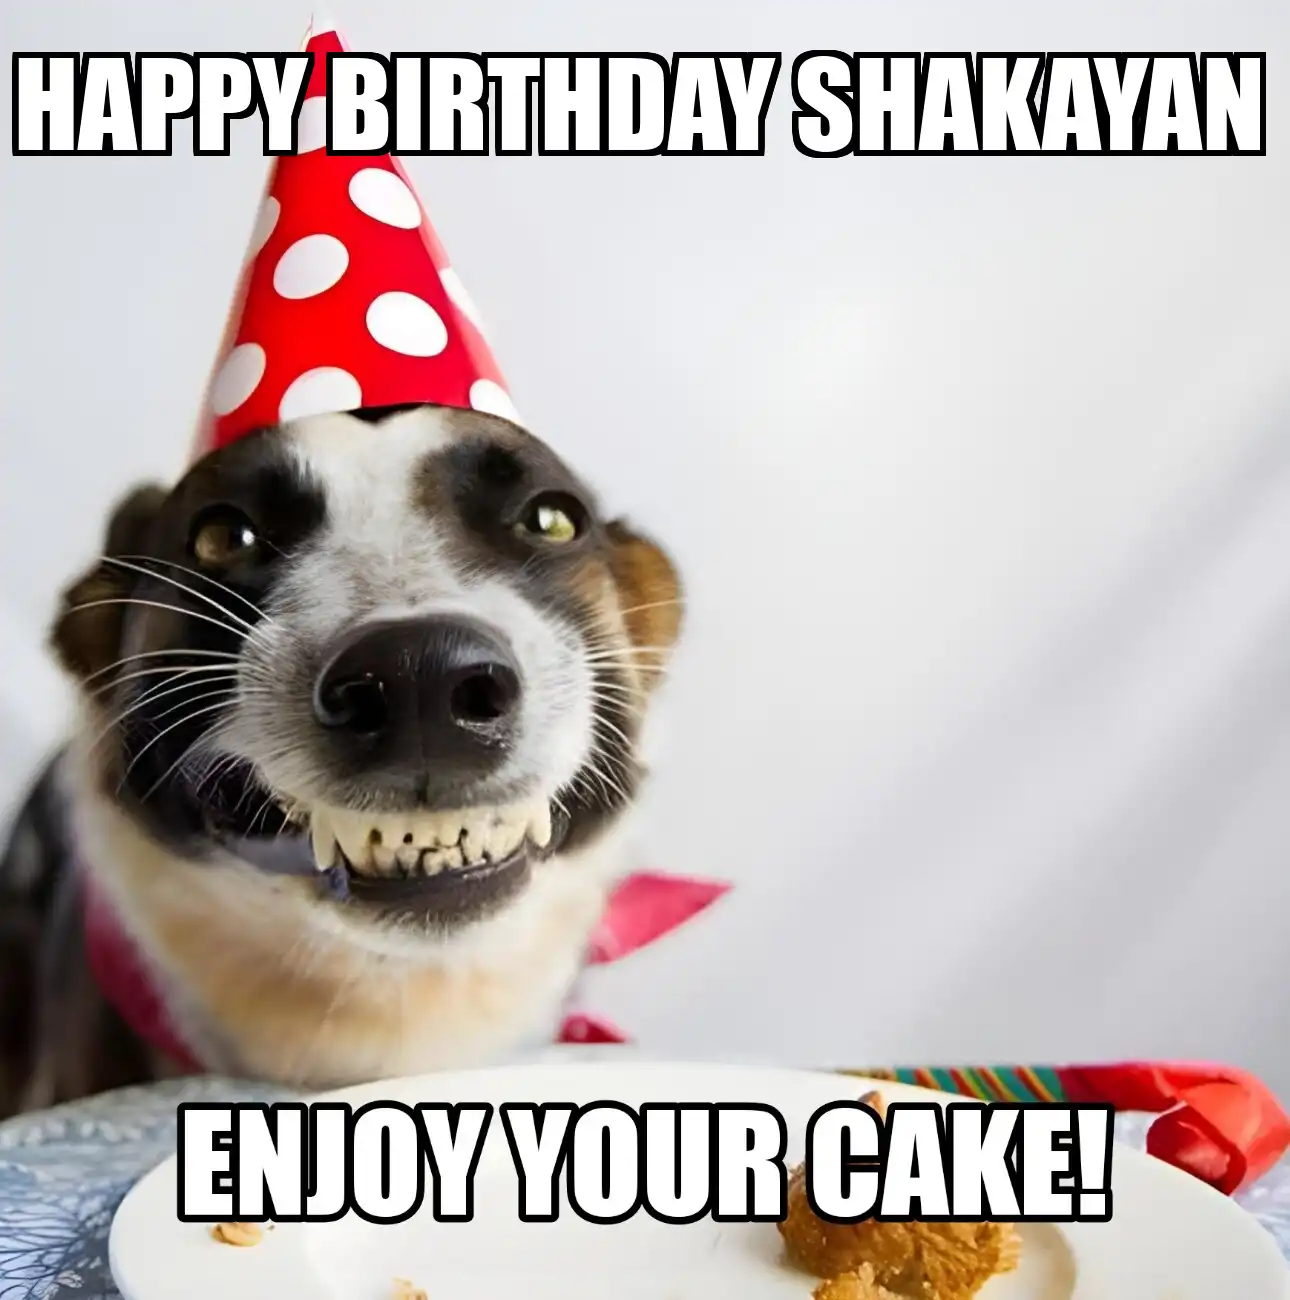 Happy Birthday Shakayan Enjoy Your Cake Dog Meme